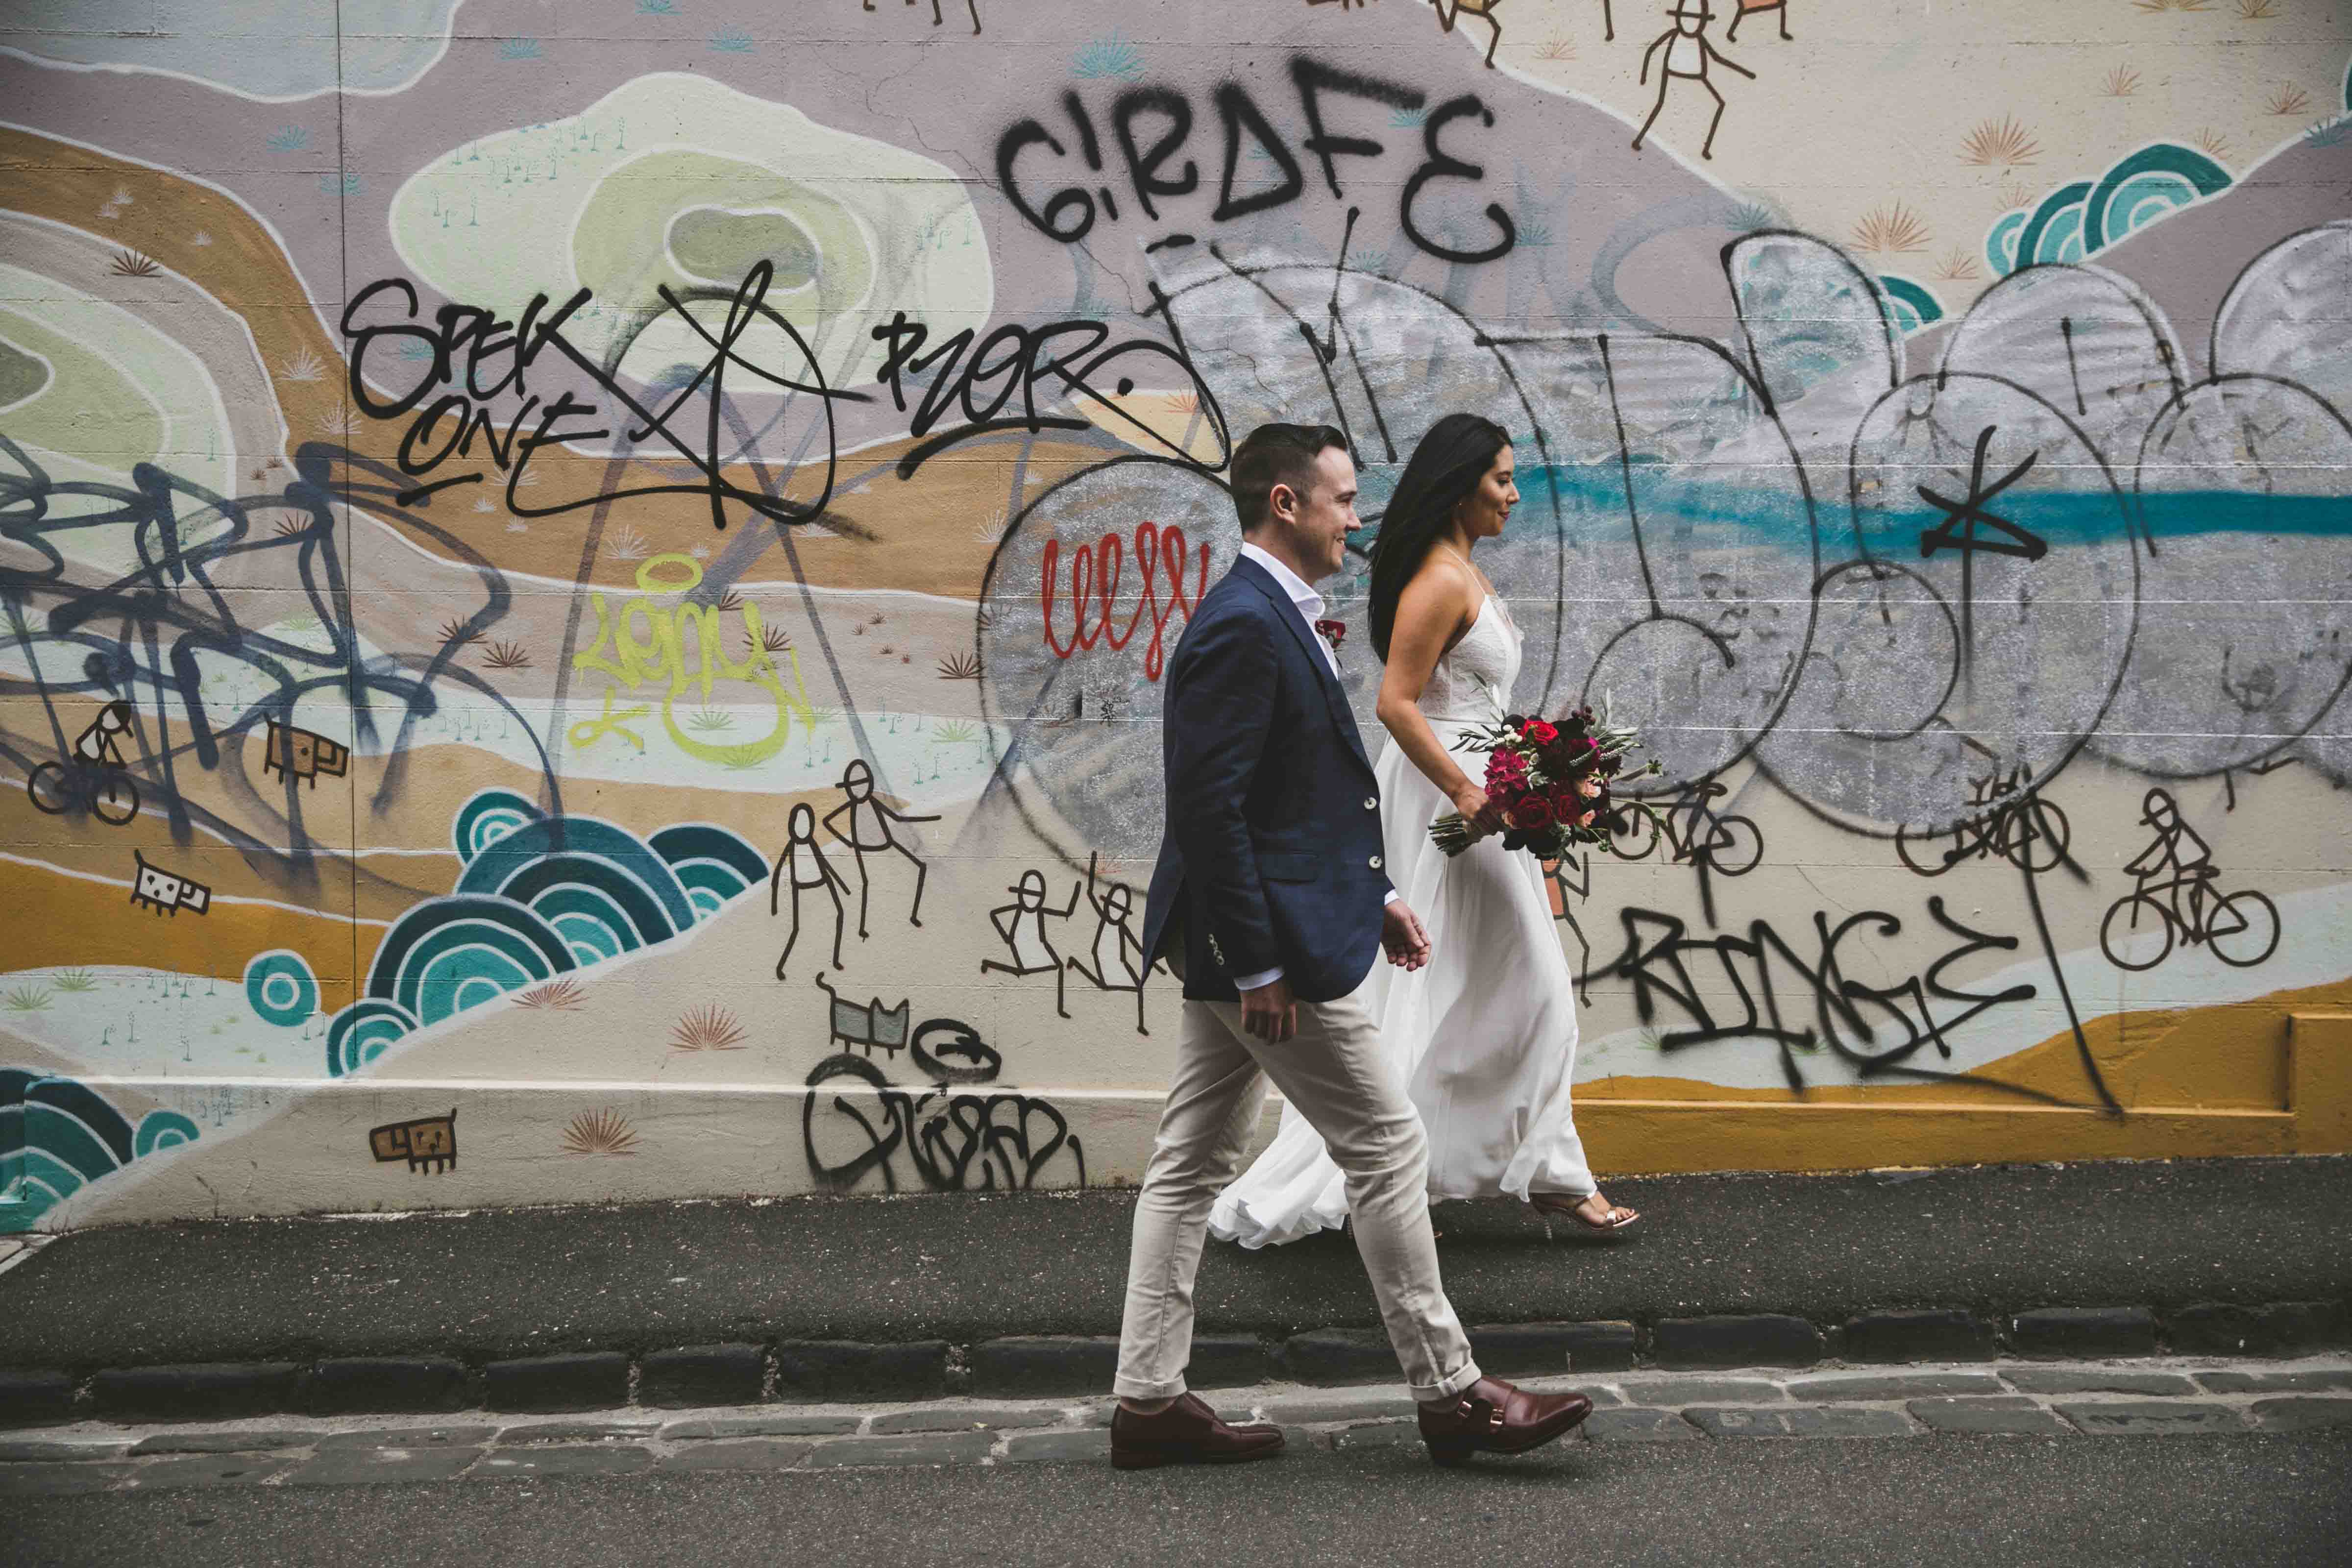 Melbourne wedding photography